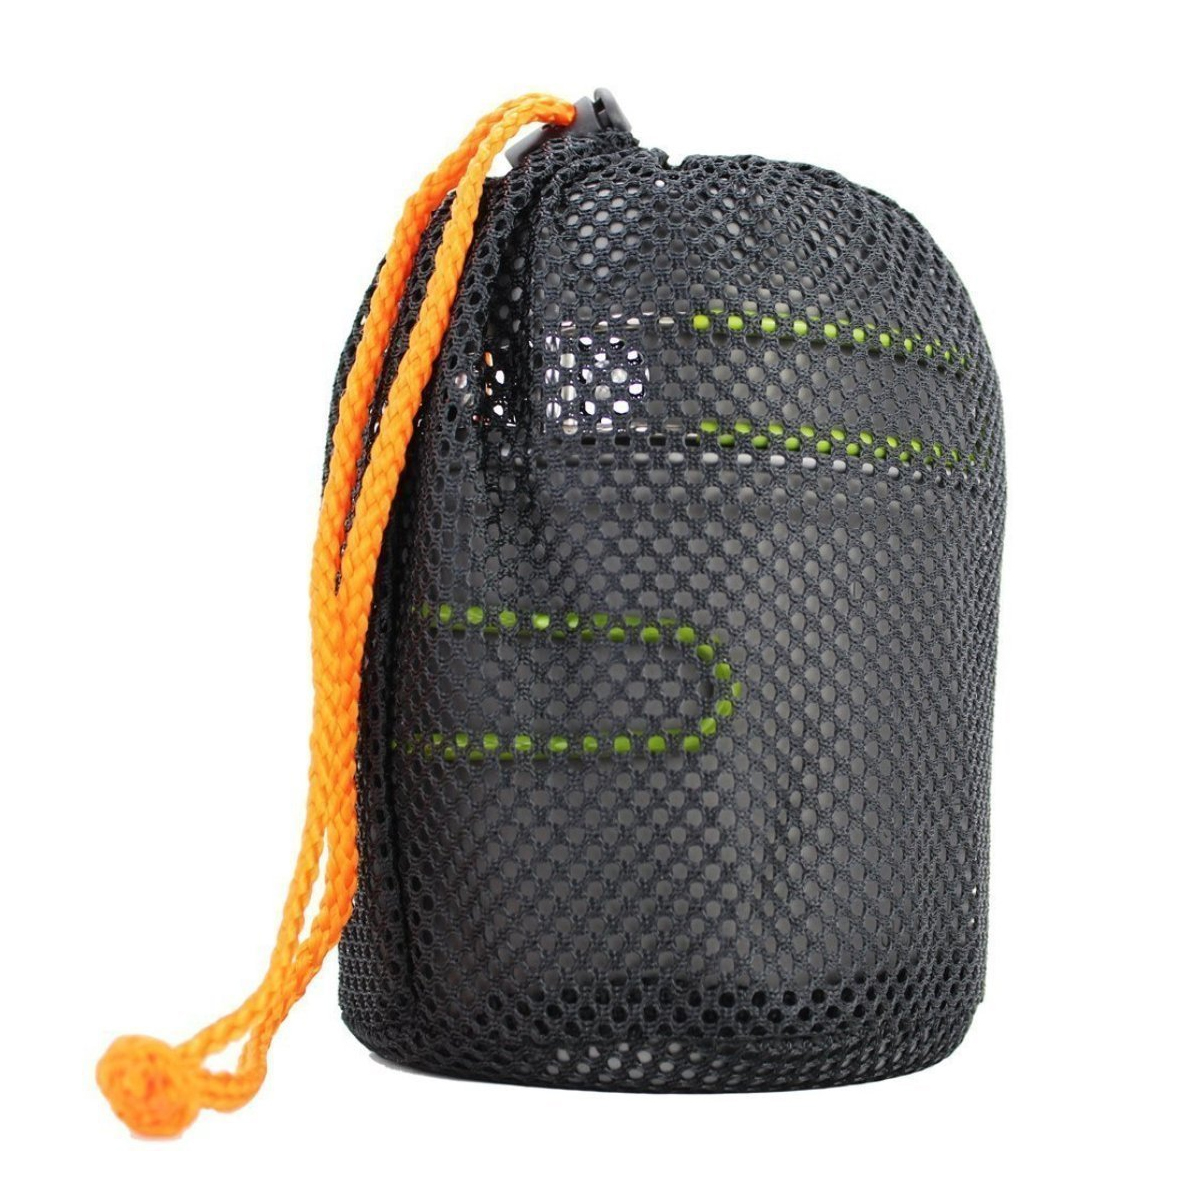 Portable-Backpacking-Outdoor-Picnic-Set-Hiking-Cookware-Camping-Pot-Bowl-Stove-Set-Burner-1452239-5